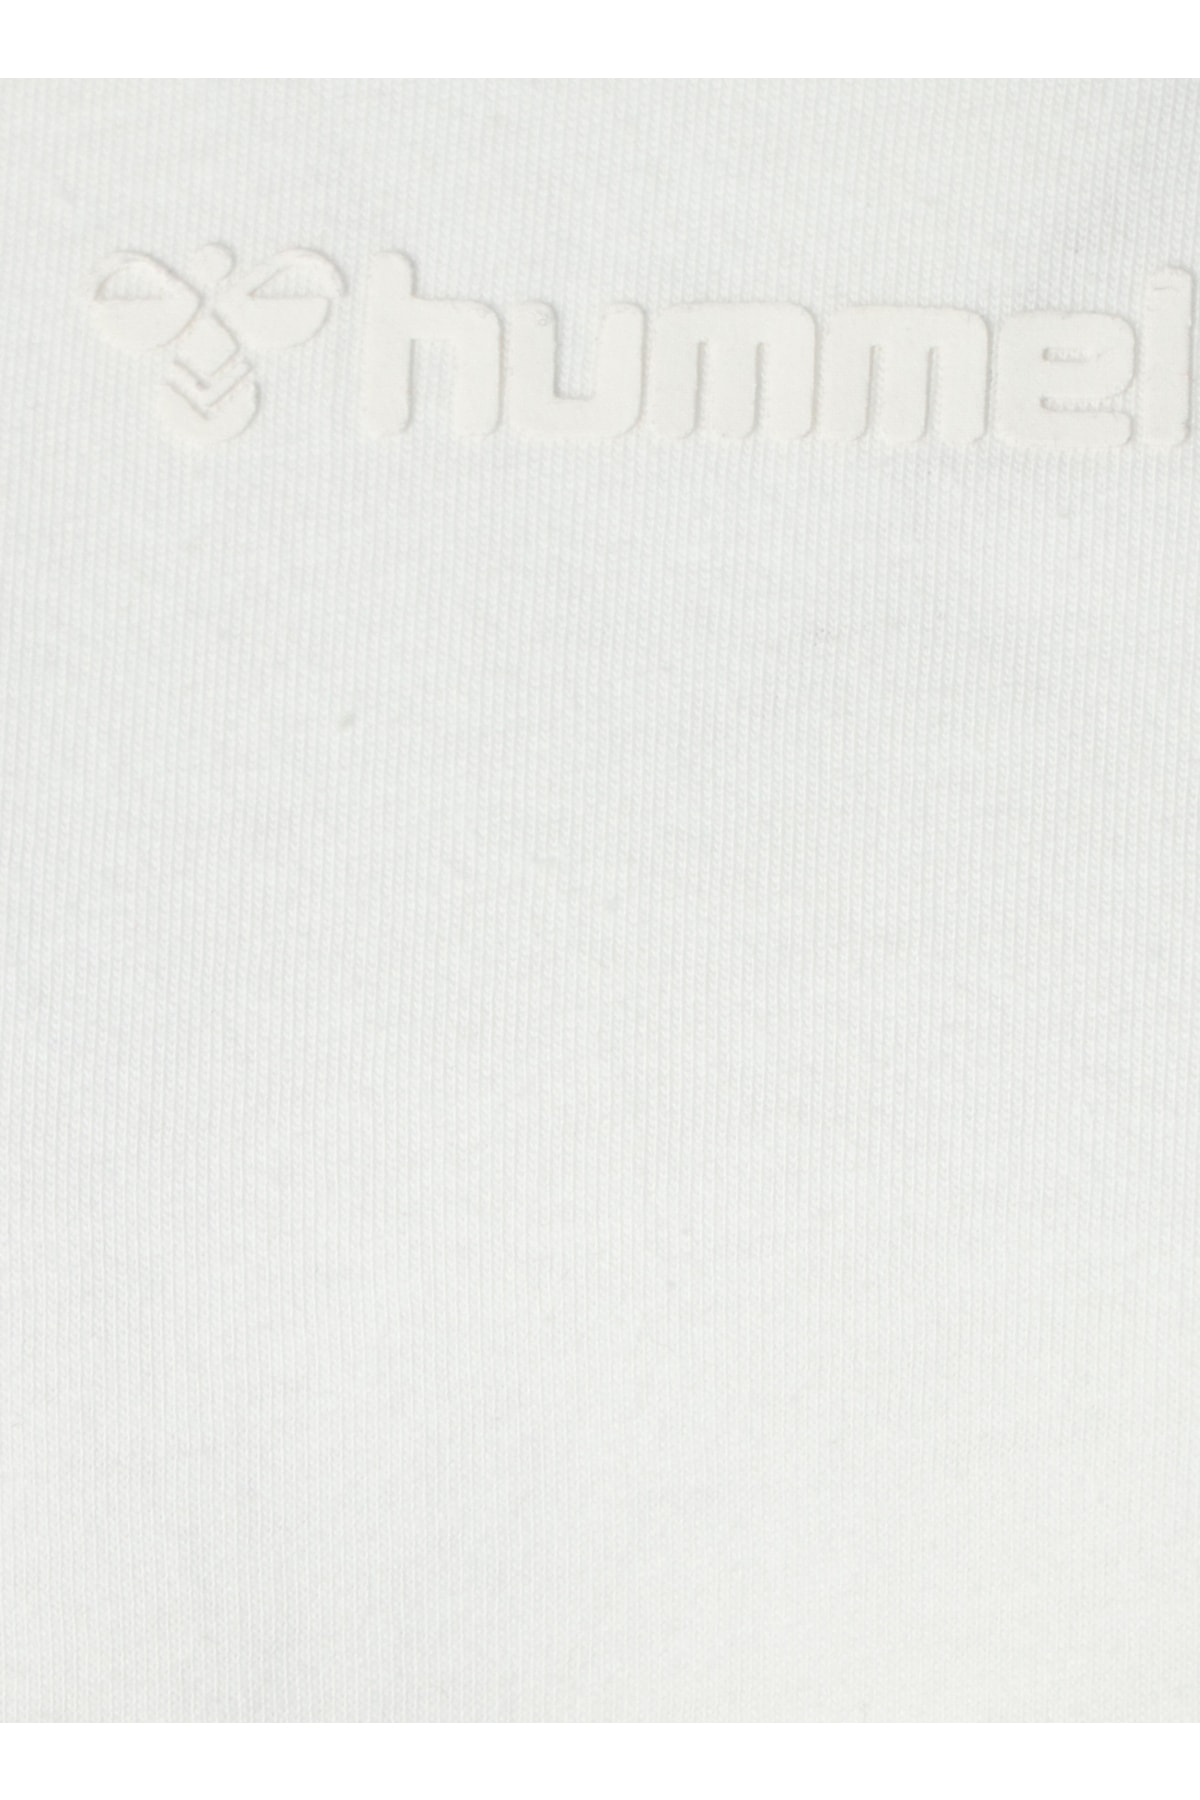 HUMMEL تیشرت سفید